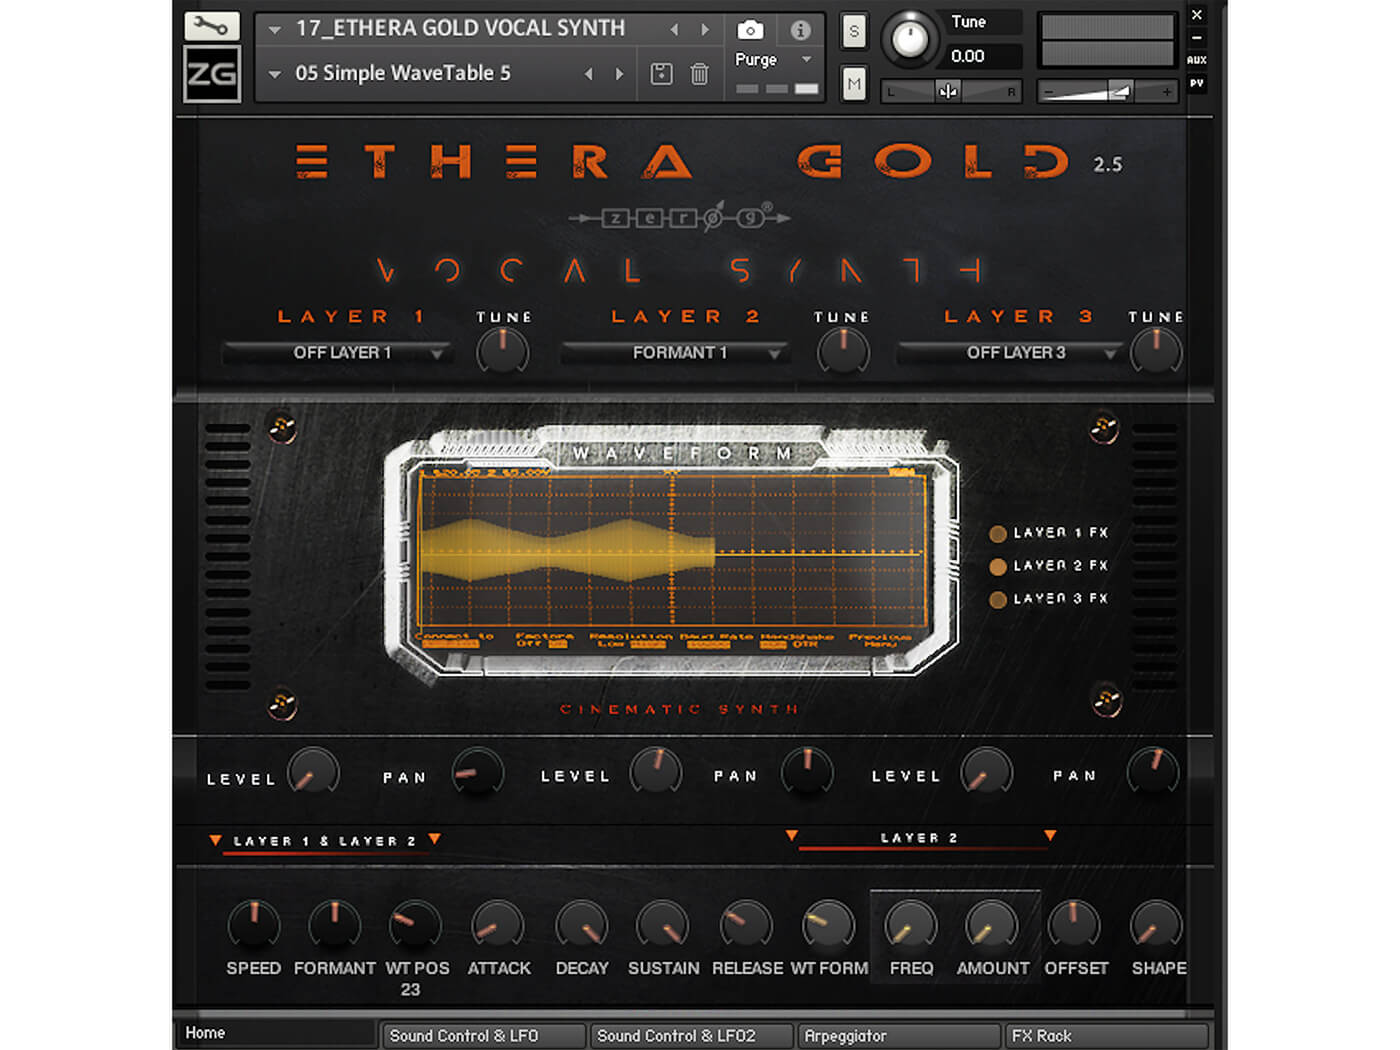 Zero-G Ethera Gold 2.5